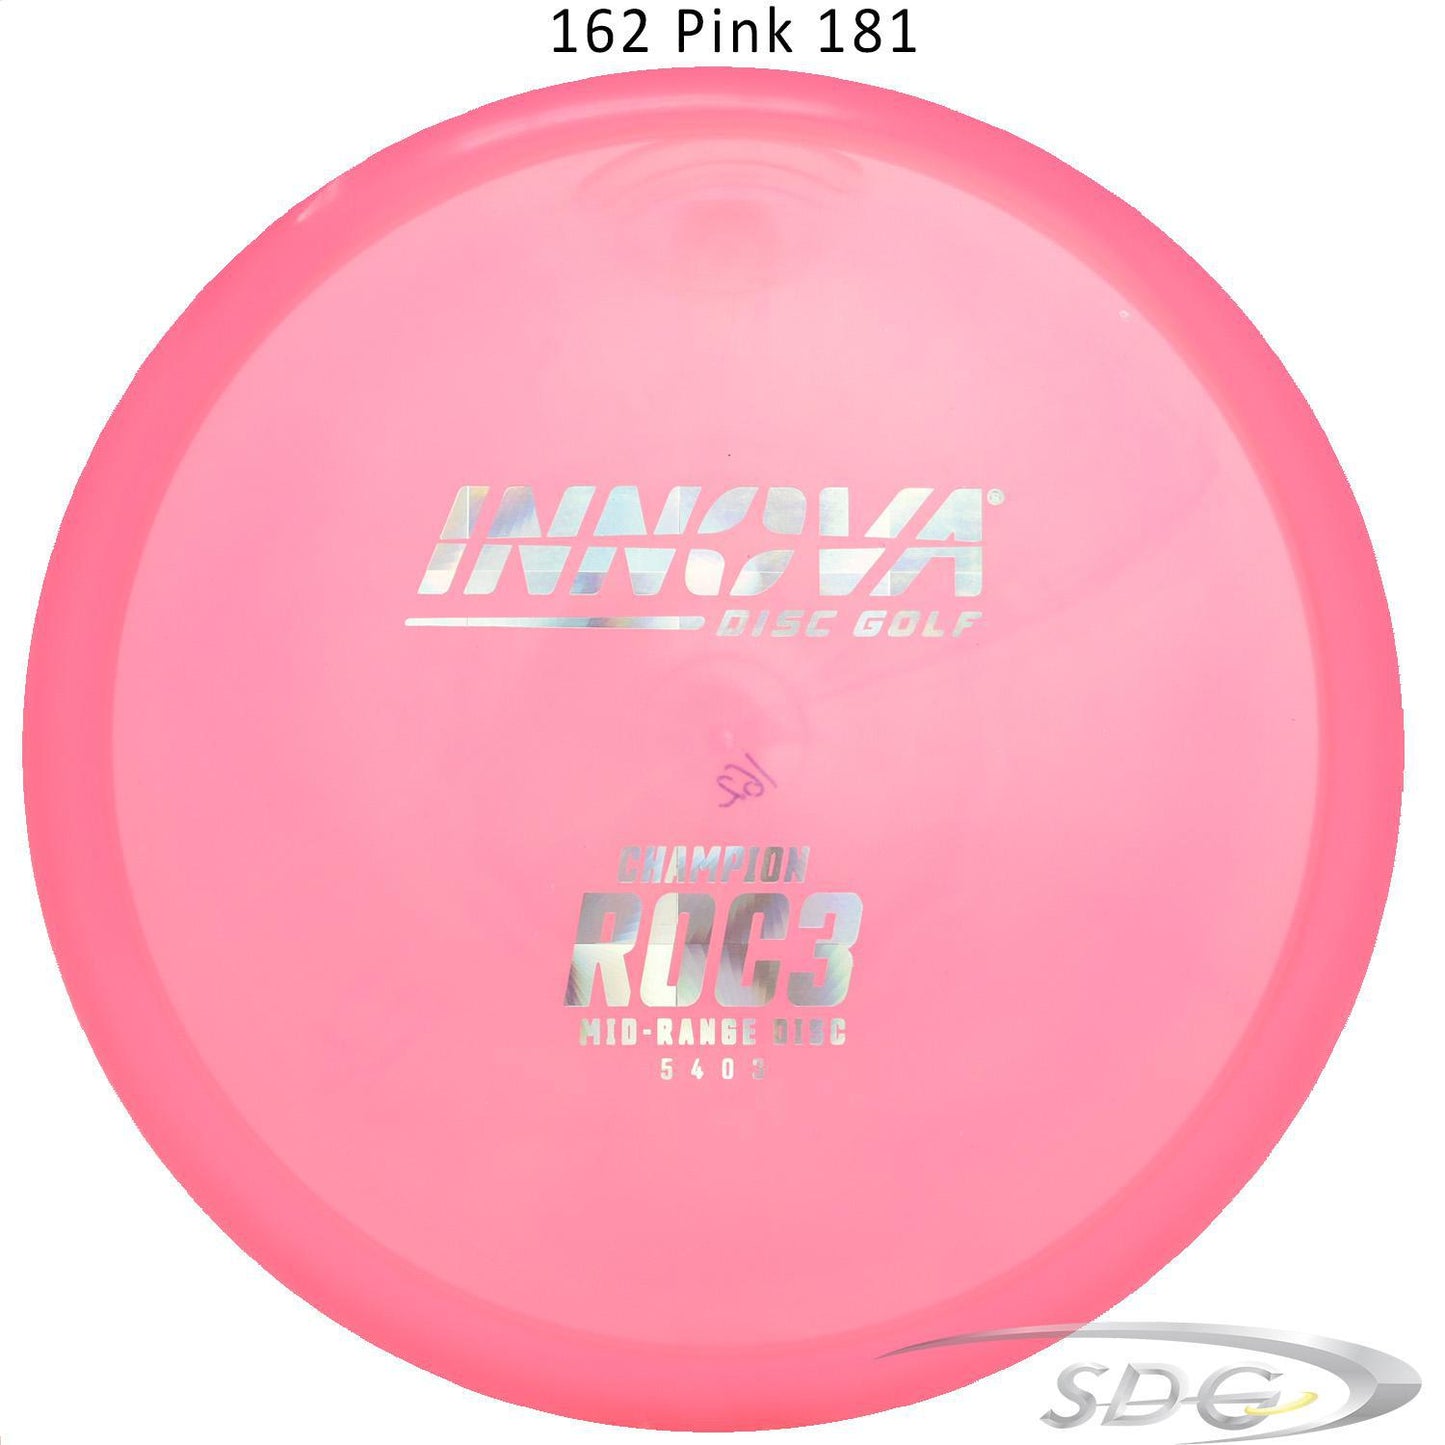 innova-champion-roc3-disc-golf-mid-range 162 Pink 181 